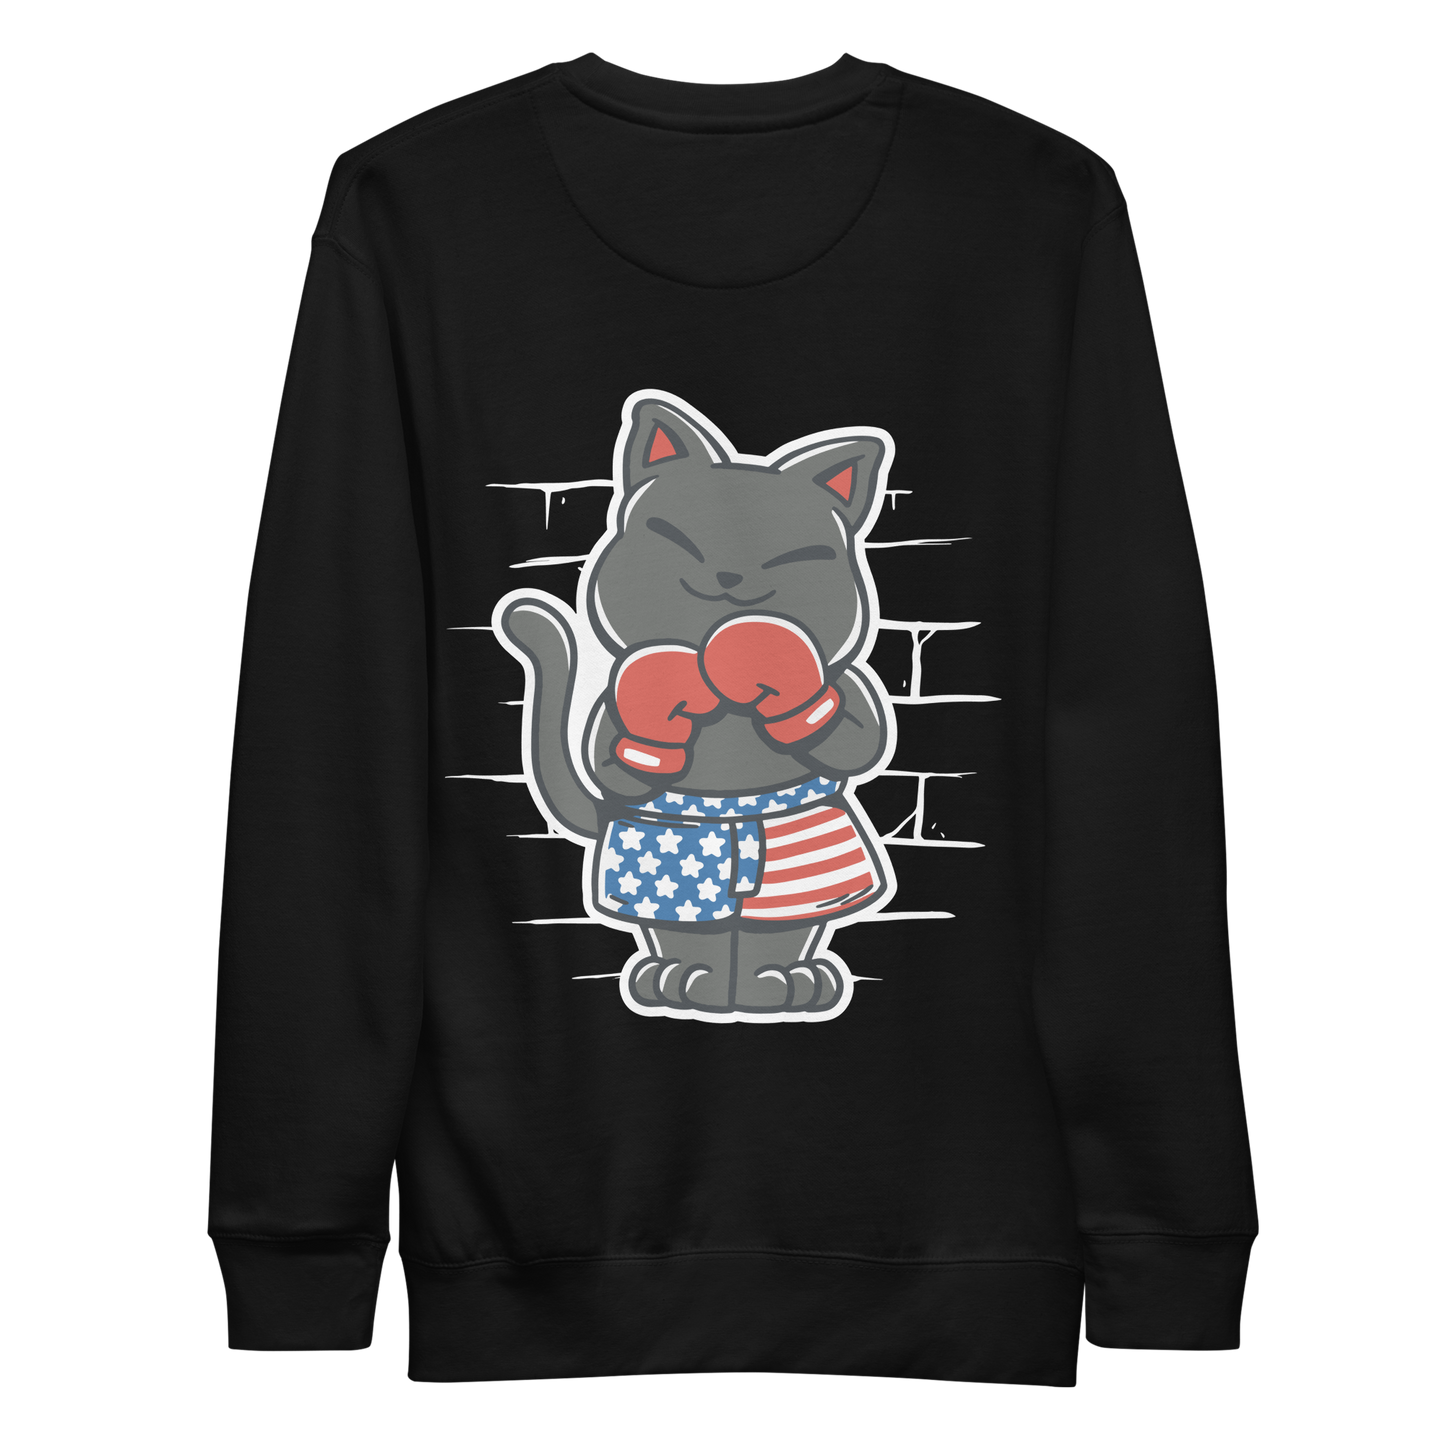 USA boxer cat | Unisex Premium Sweatshirt - F&B